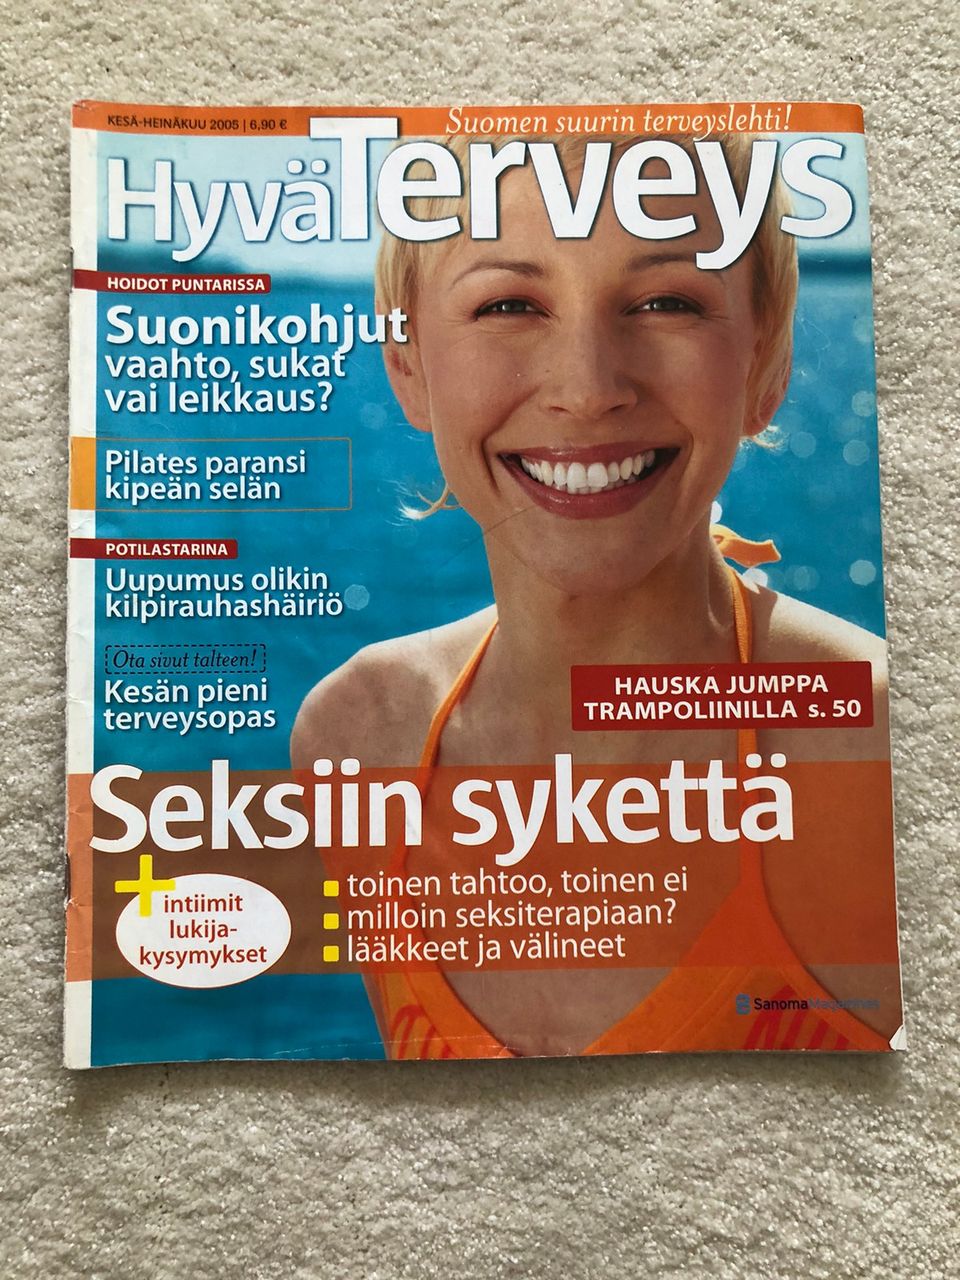 Hyvä terveys-lehti 6-7/2005.